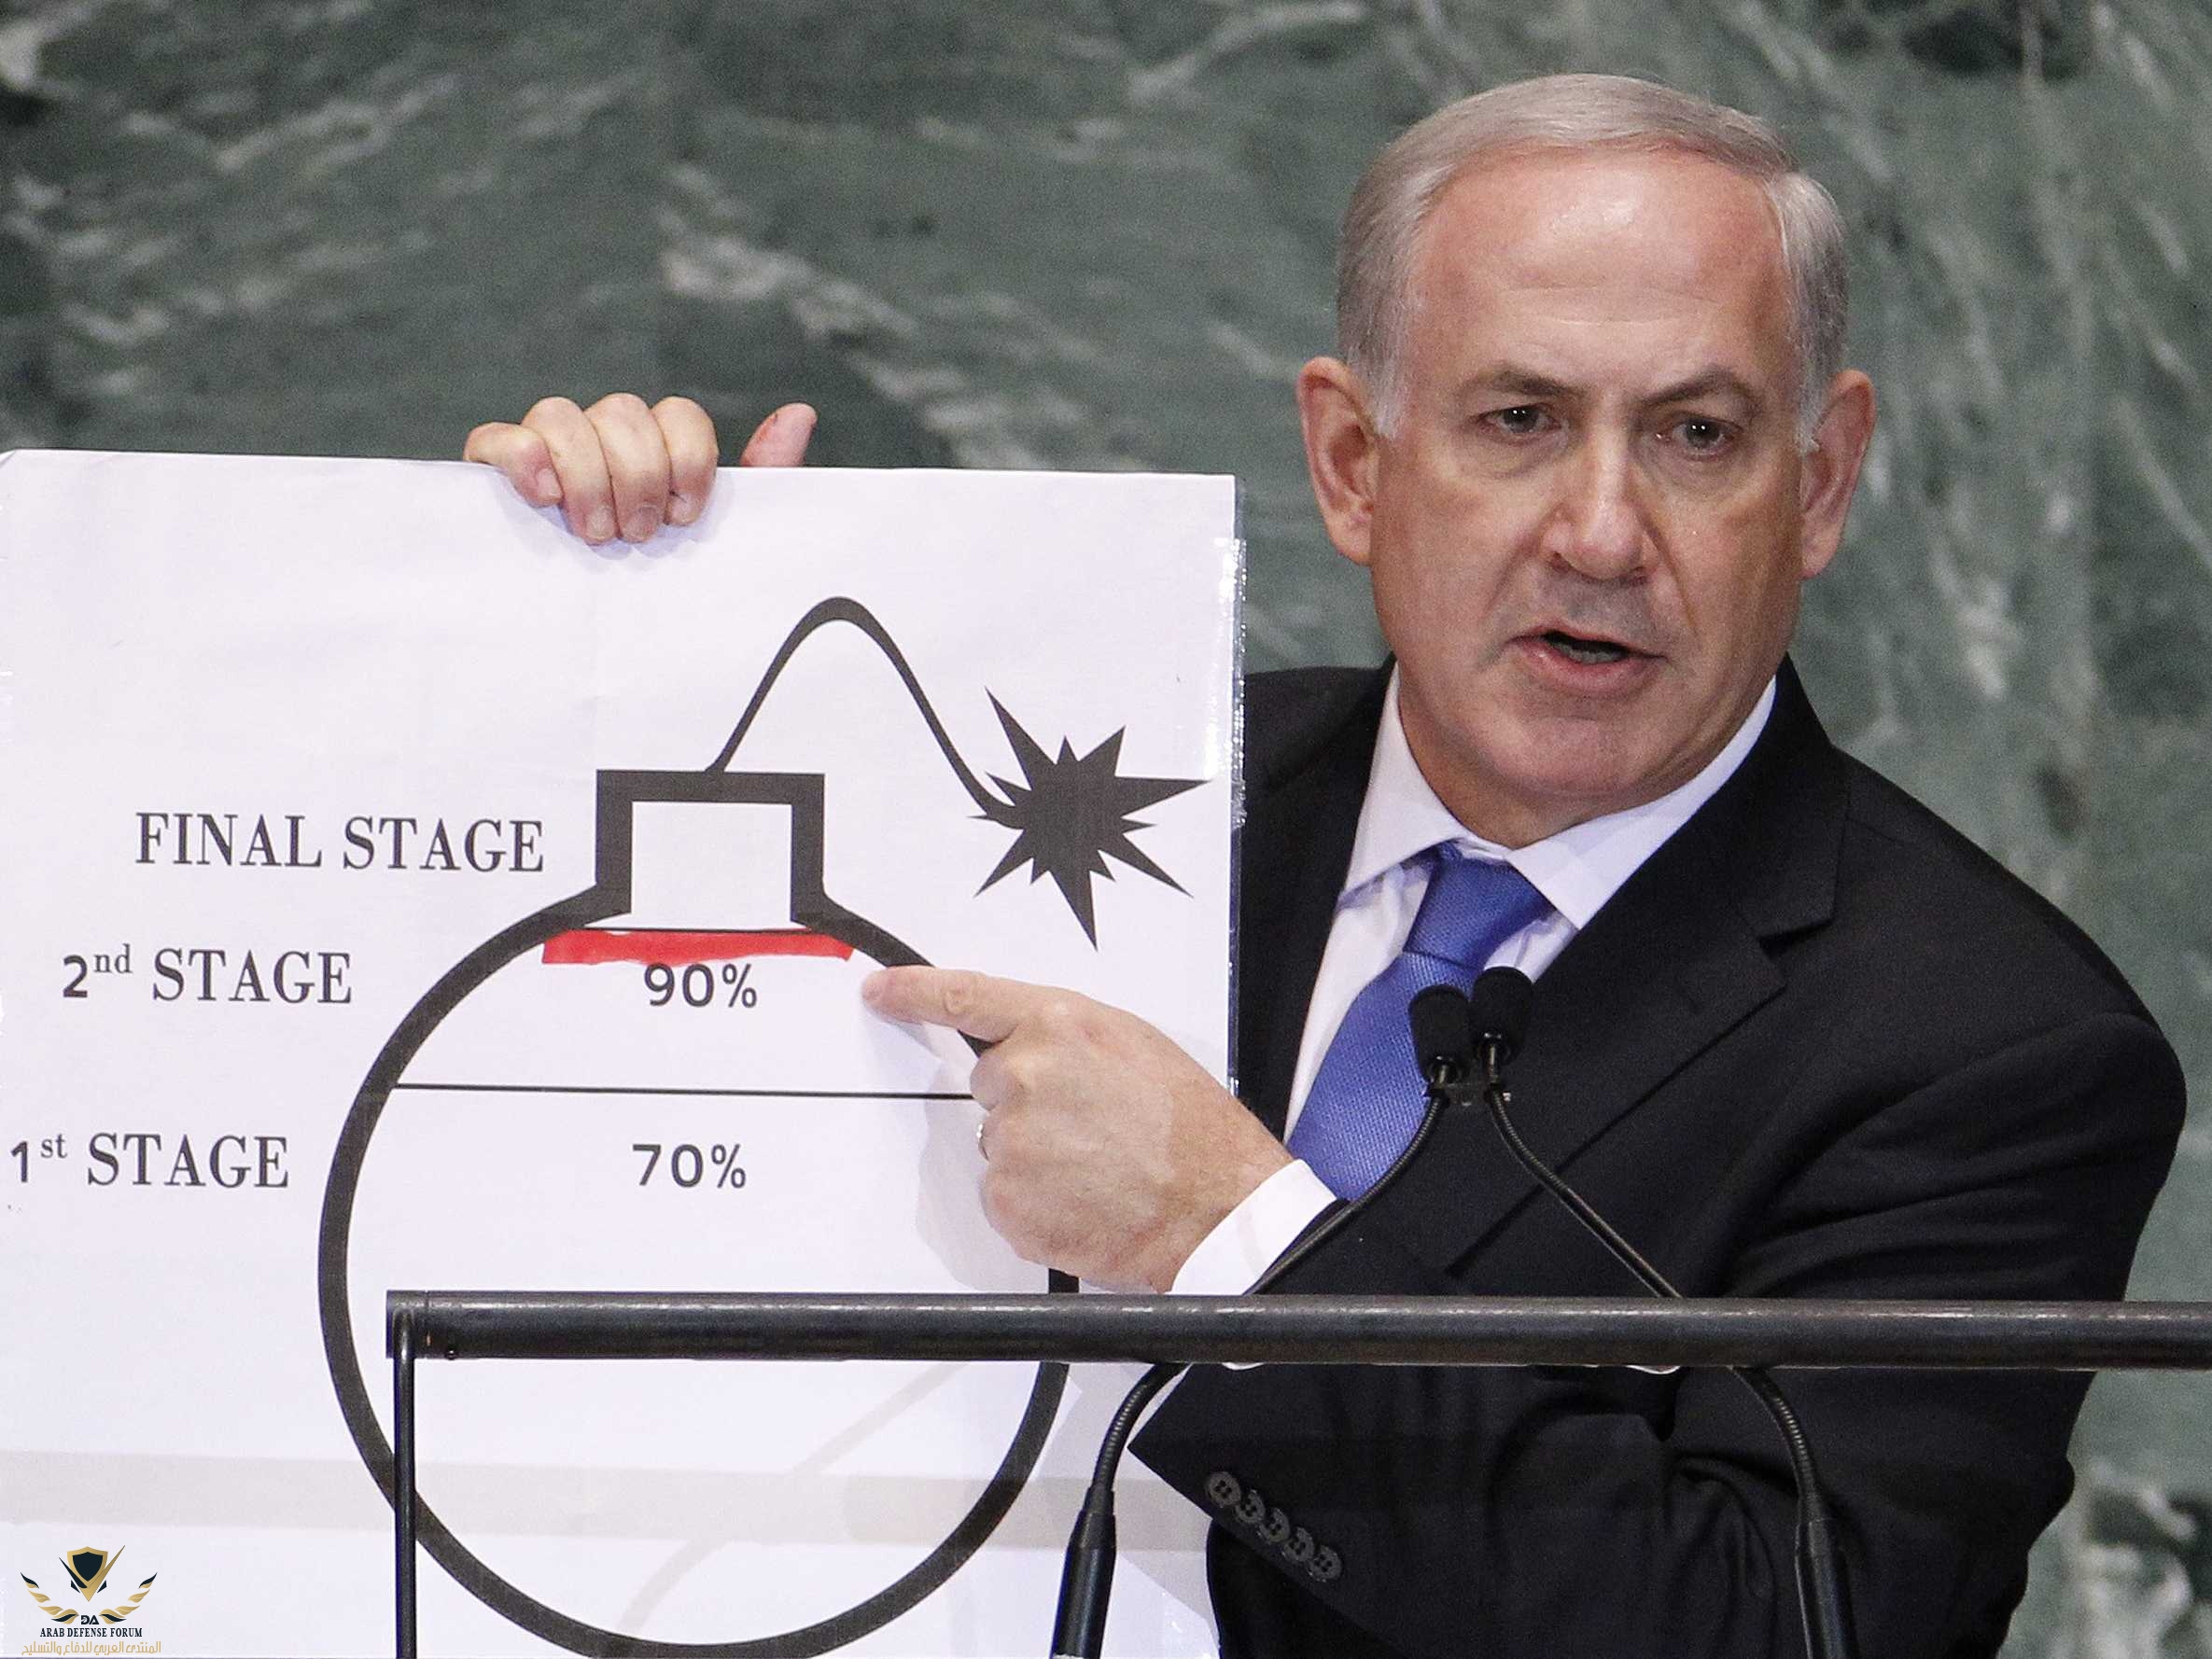 former-israeli-intelligence-chief-iran-has-already-crossed-israels-red-line.jpg